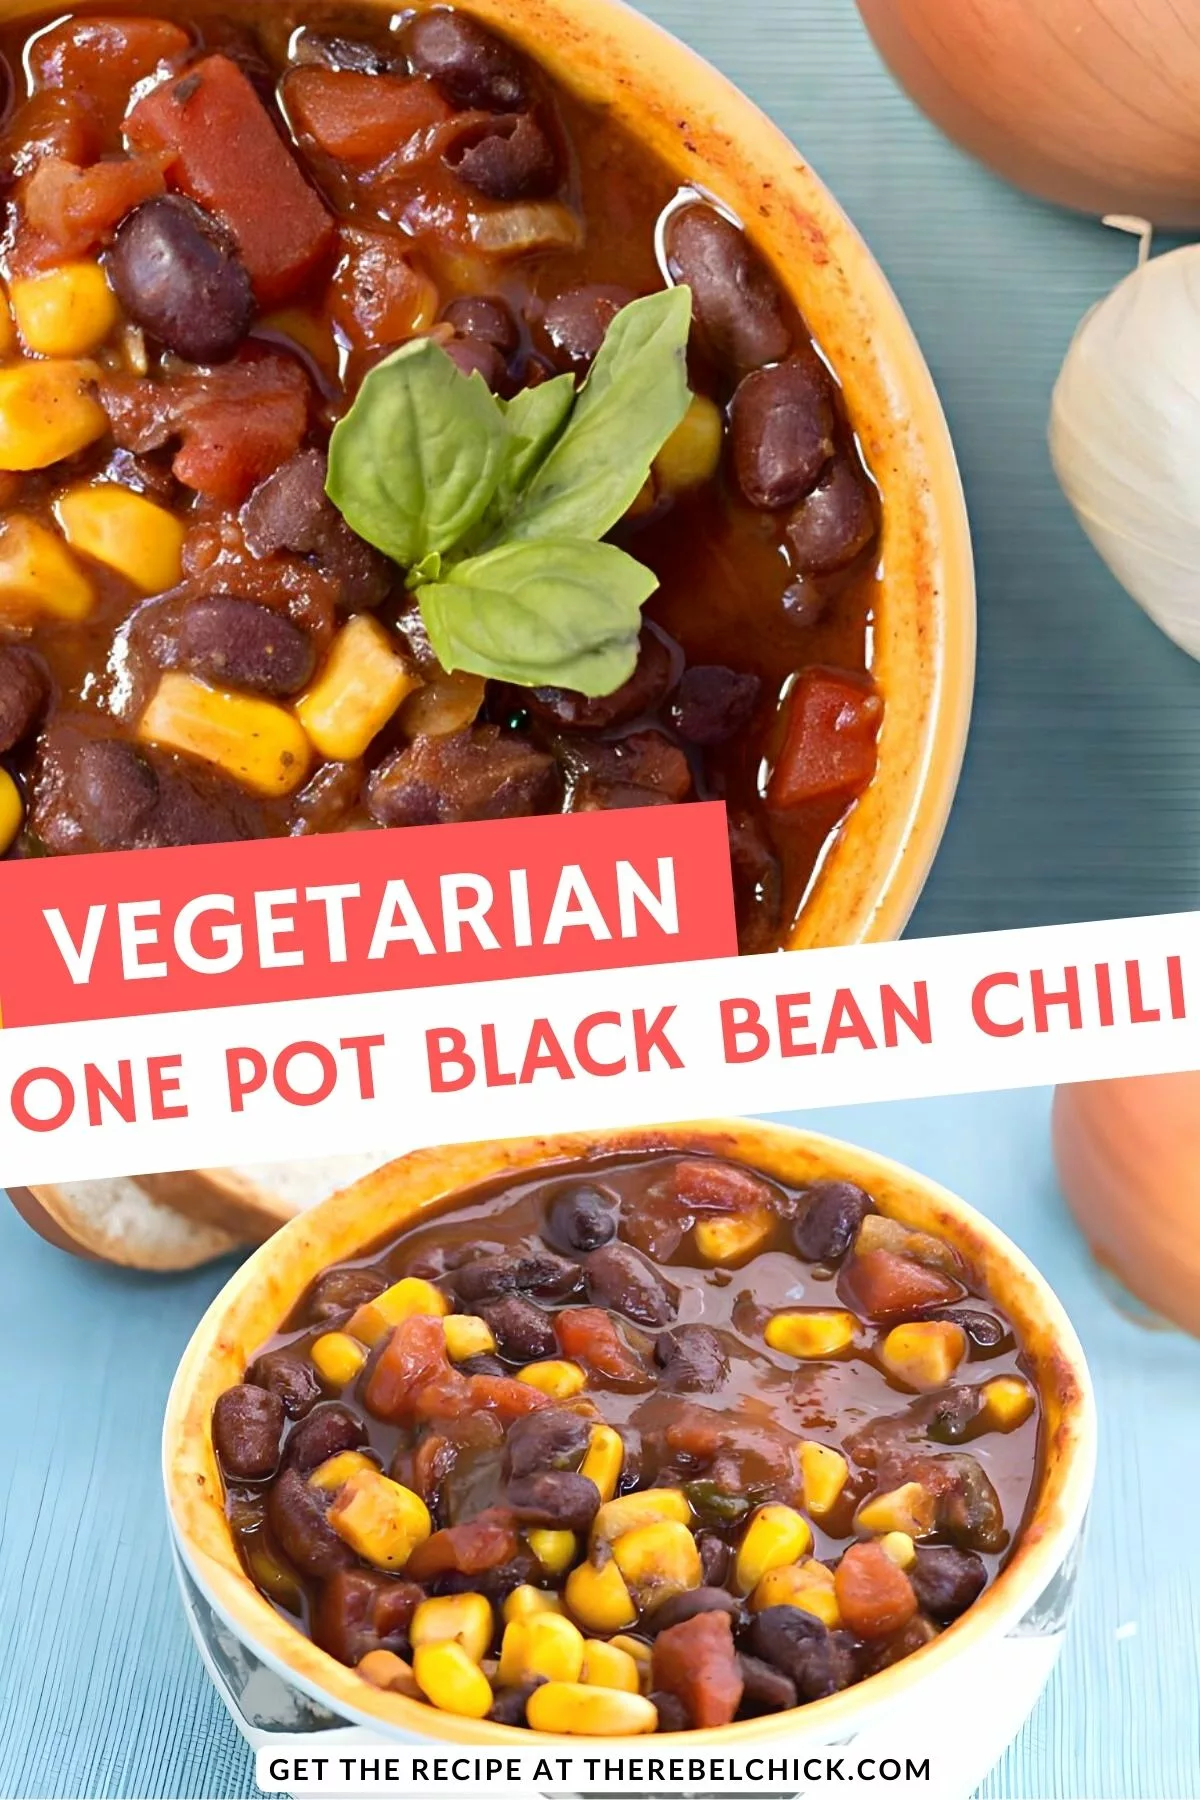 One Pot Meatless Black Bean Chili Recipe